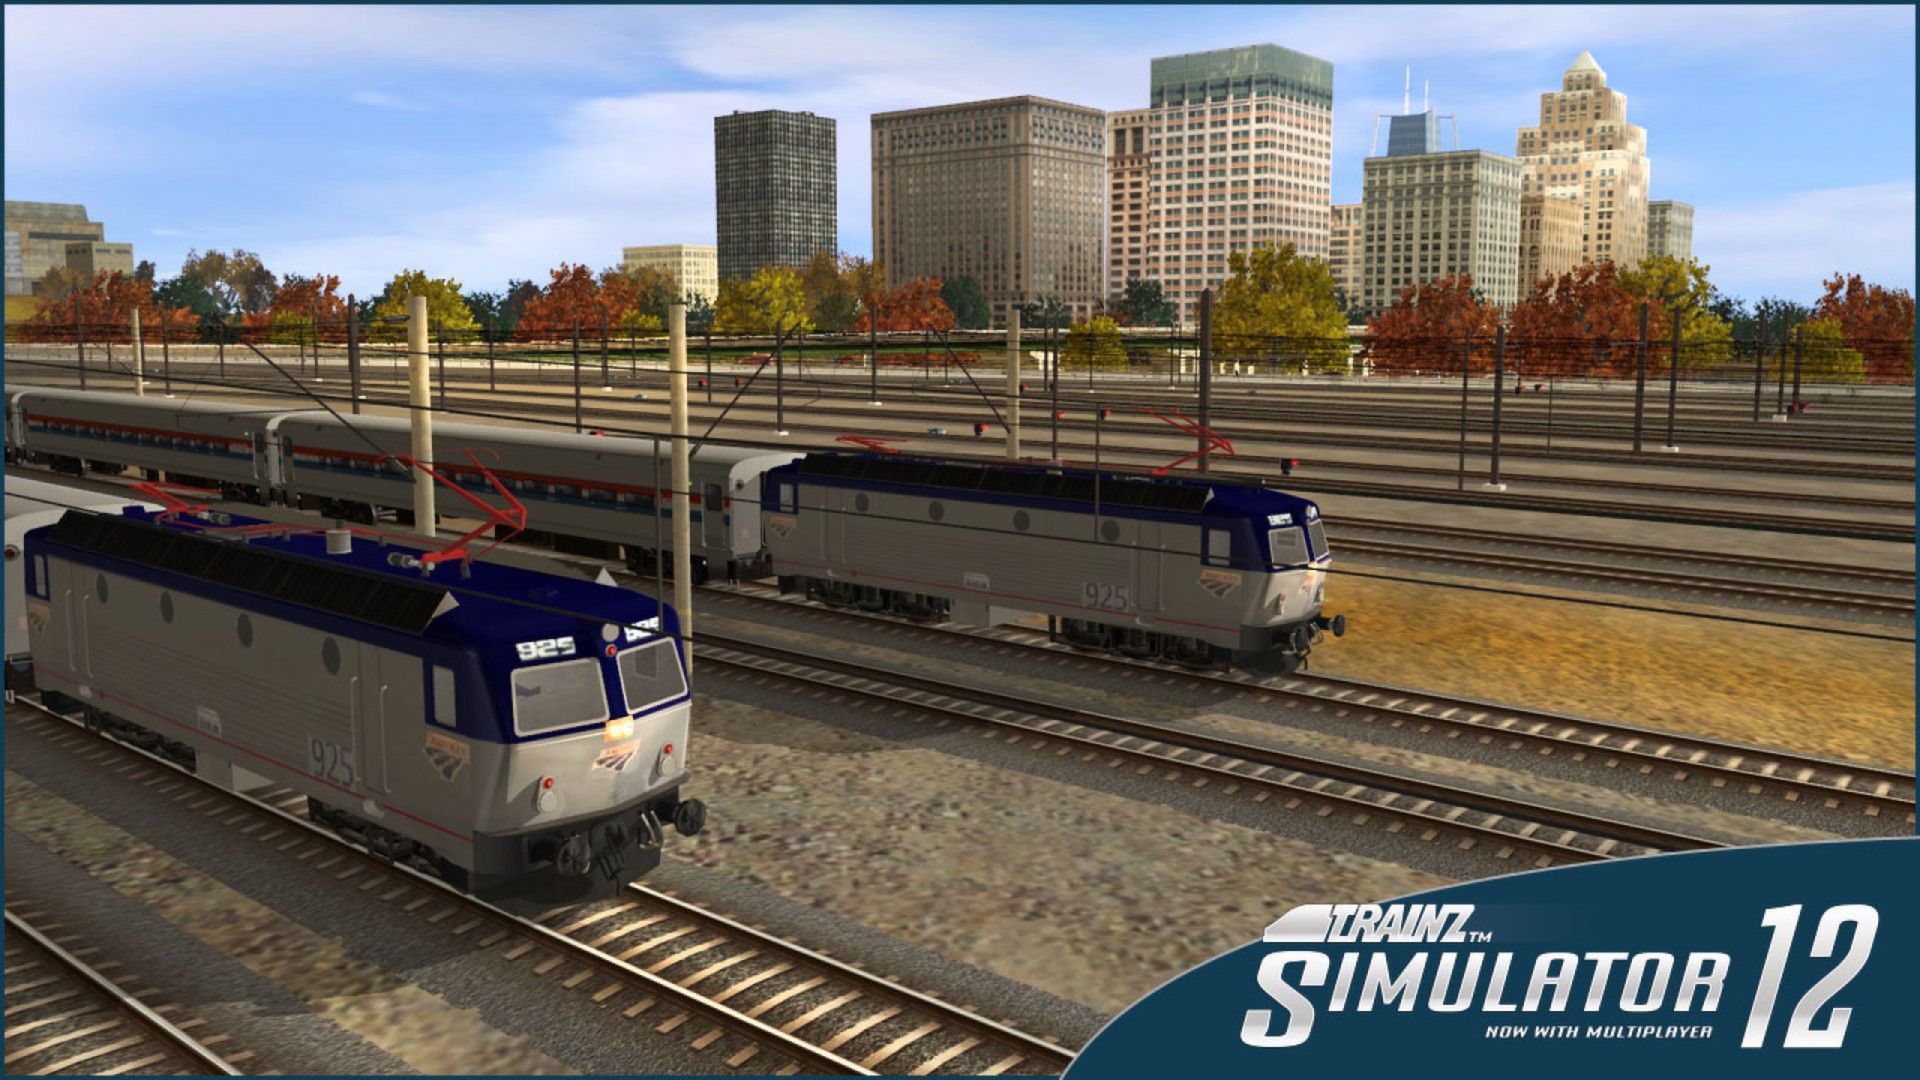 trainz simulator 12 free download apk